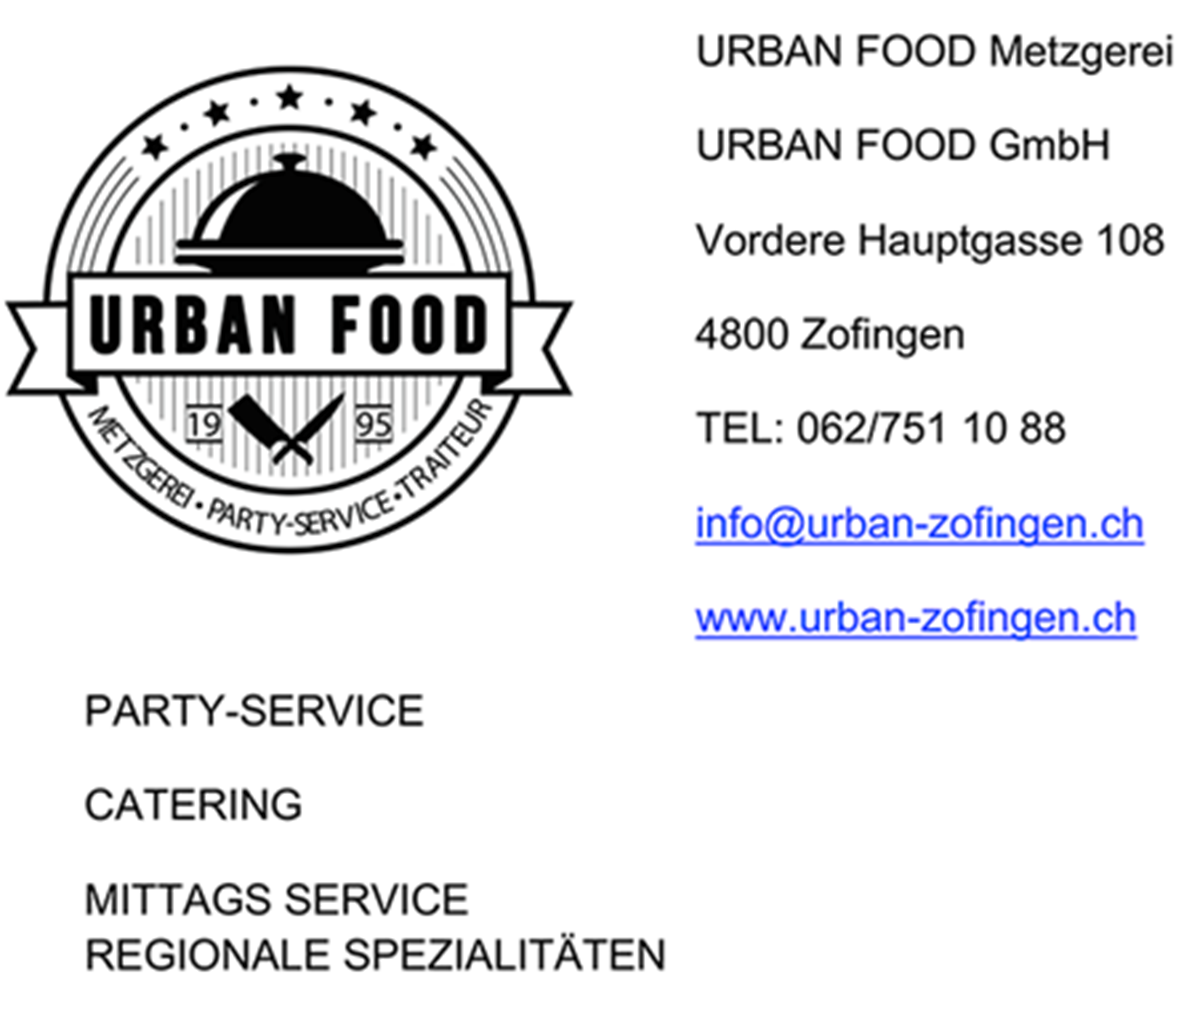 Urban Food GmbH (1)